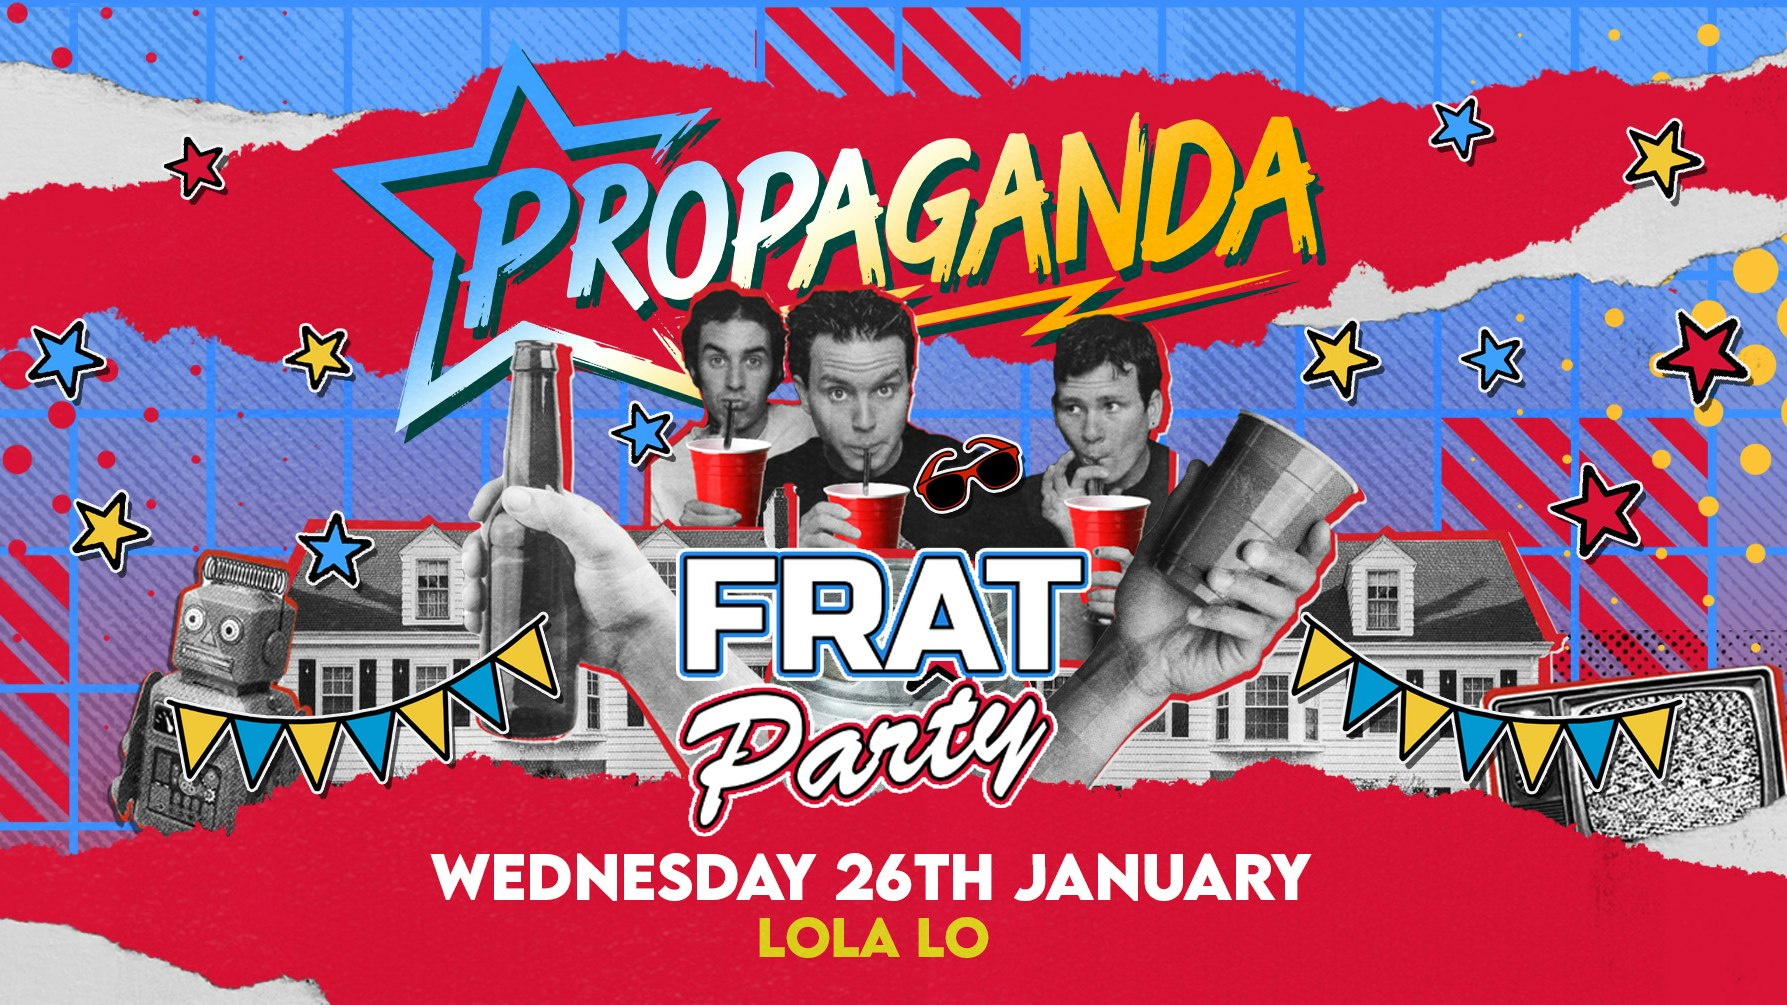 Propaganda Cambridge – Frat Party!